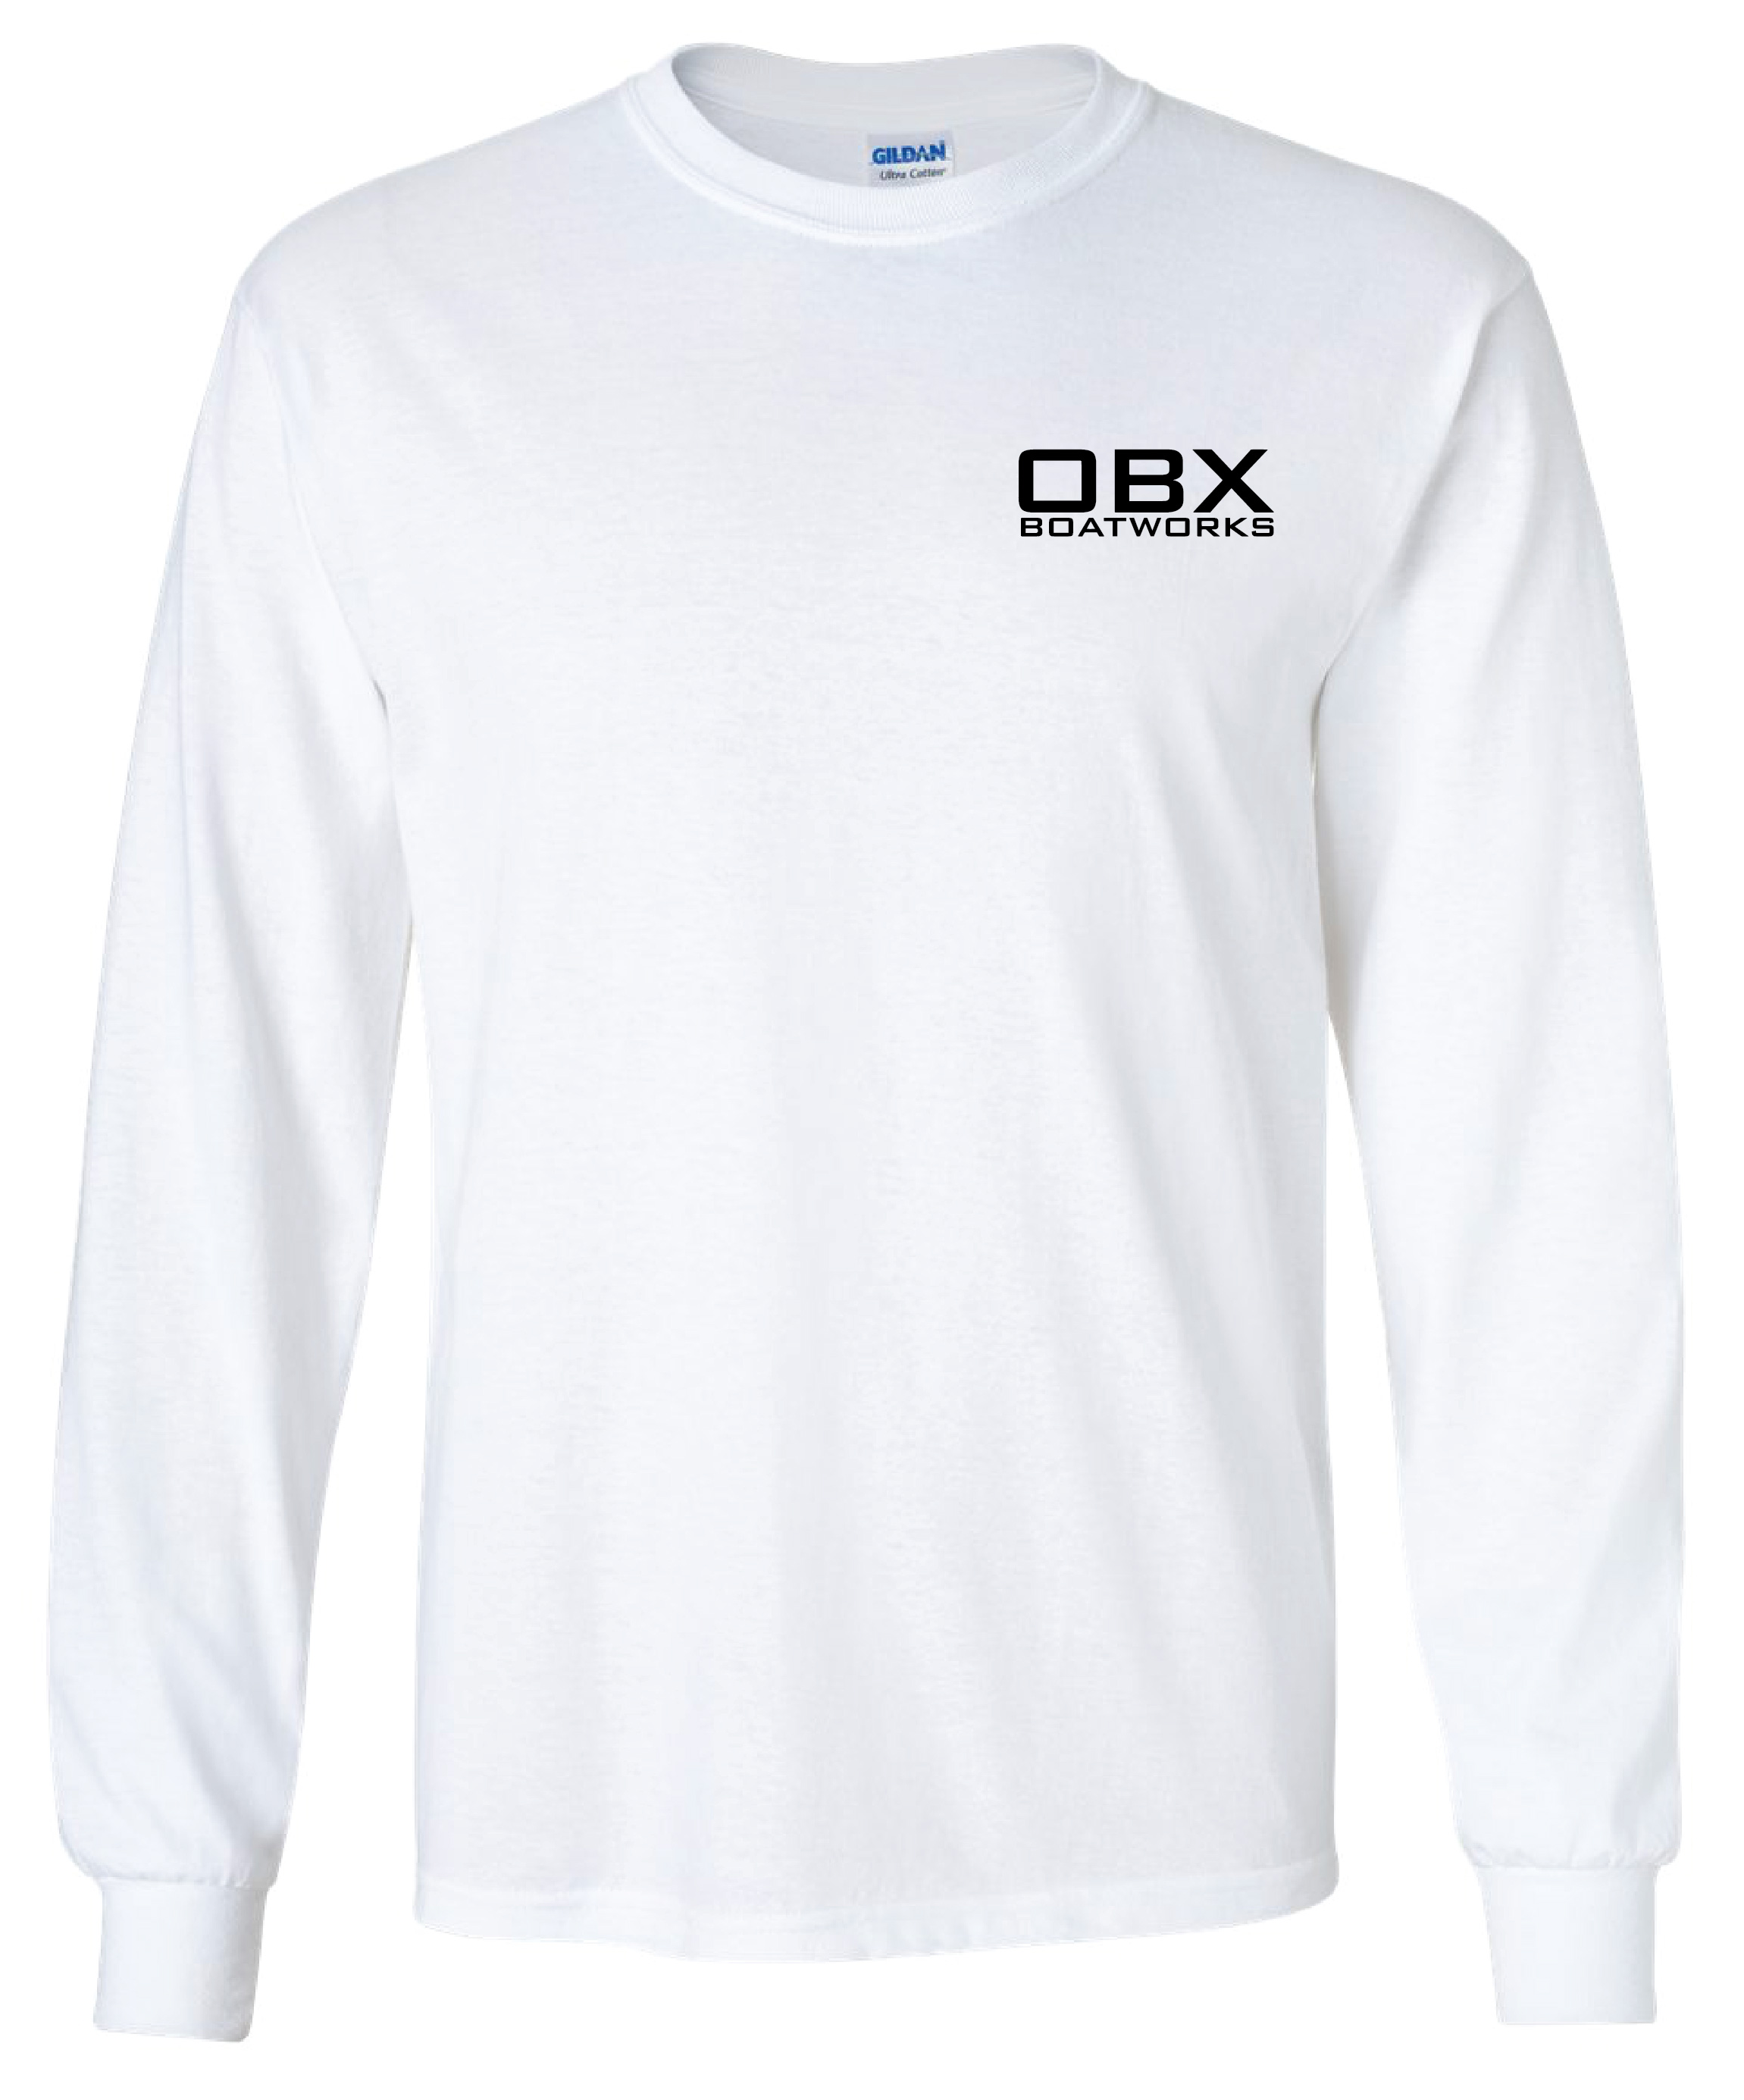 OBX Boatworks Sailfish Long Sleeve Cotton T-Shirt - White